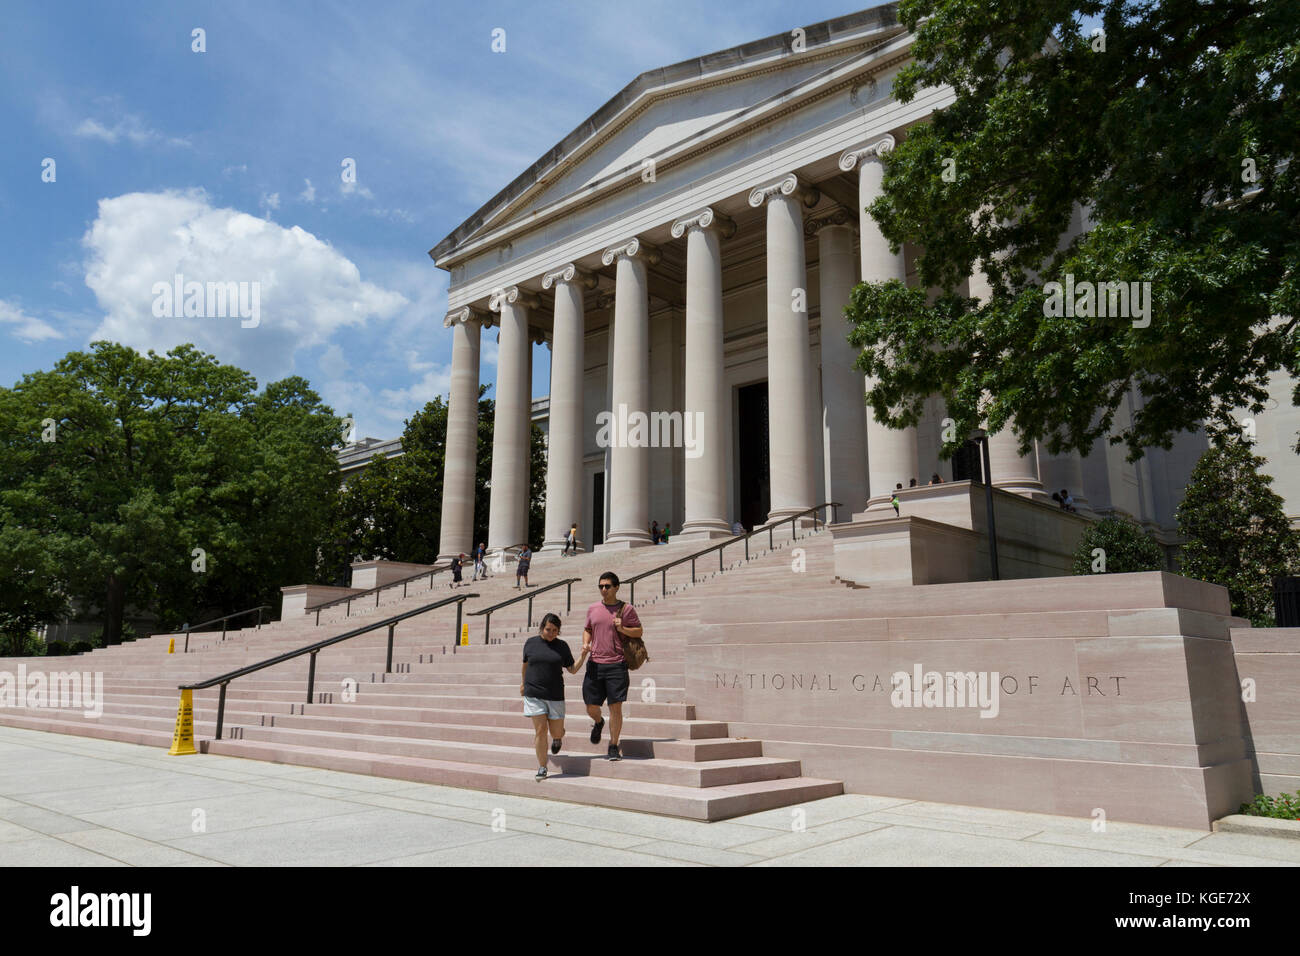 The National Gallery of Art, Washington DC, United States. Stock Photo